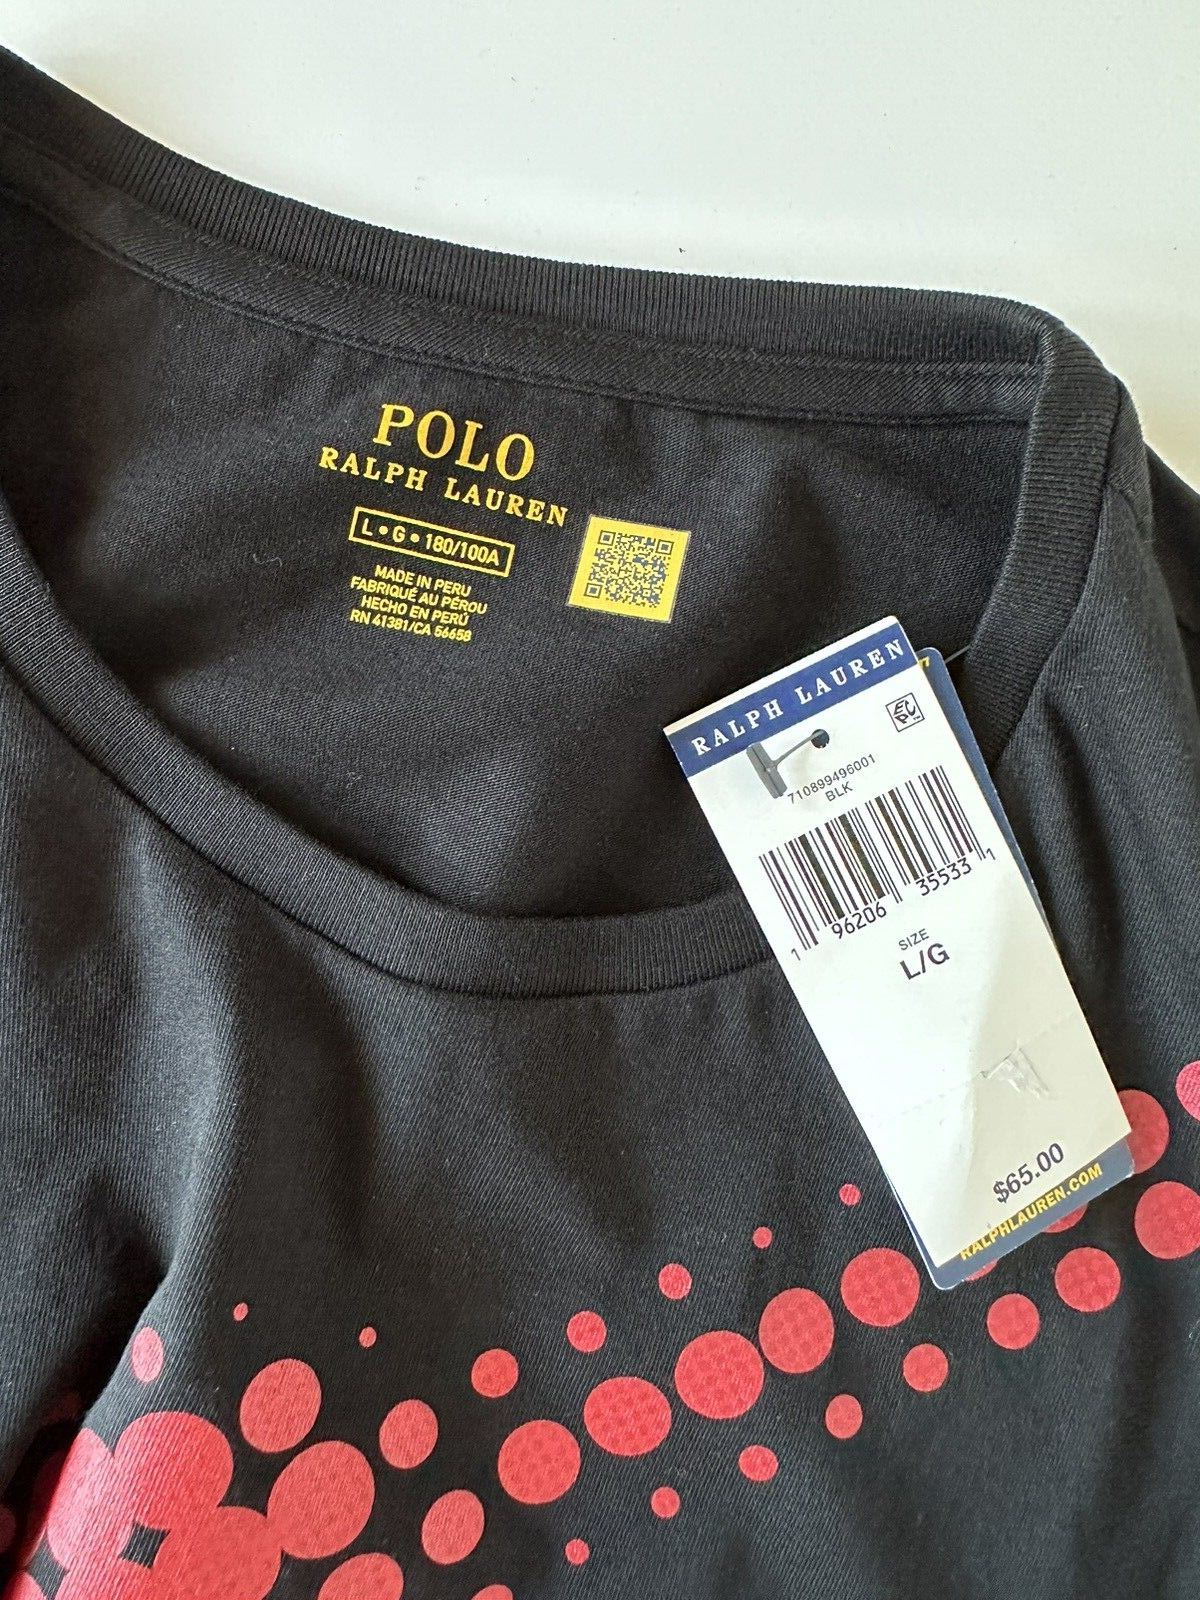 NWT $65 Polo Ralph Lauren Short Sleeve Logo T-shirt Black L